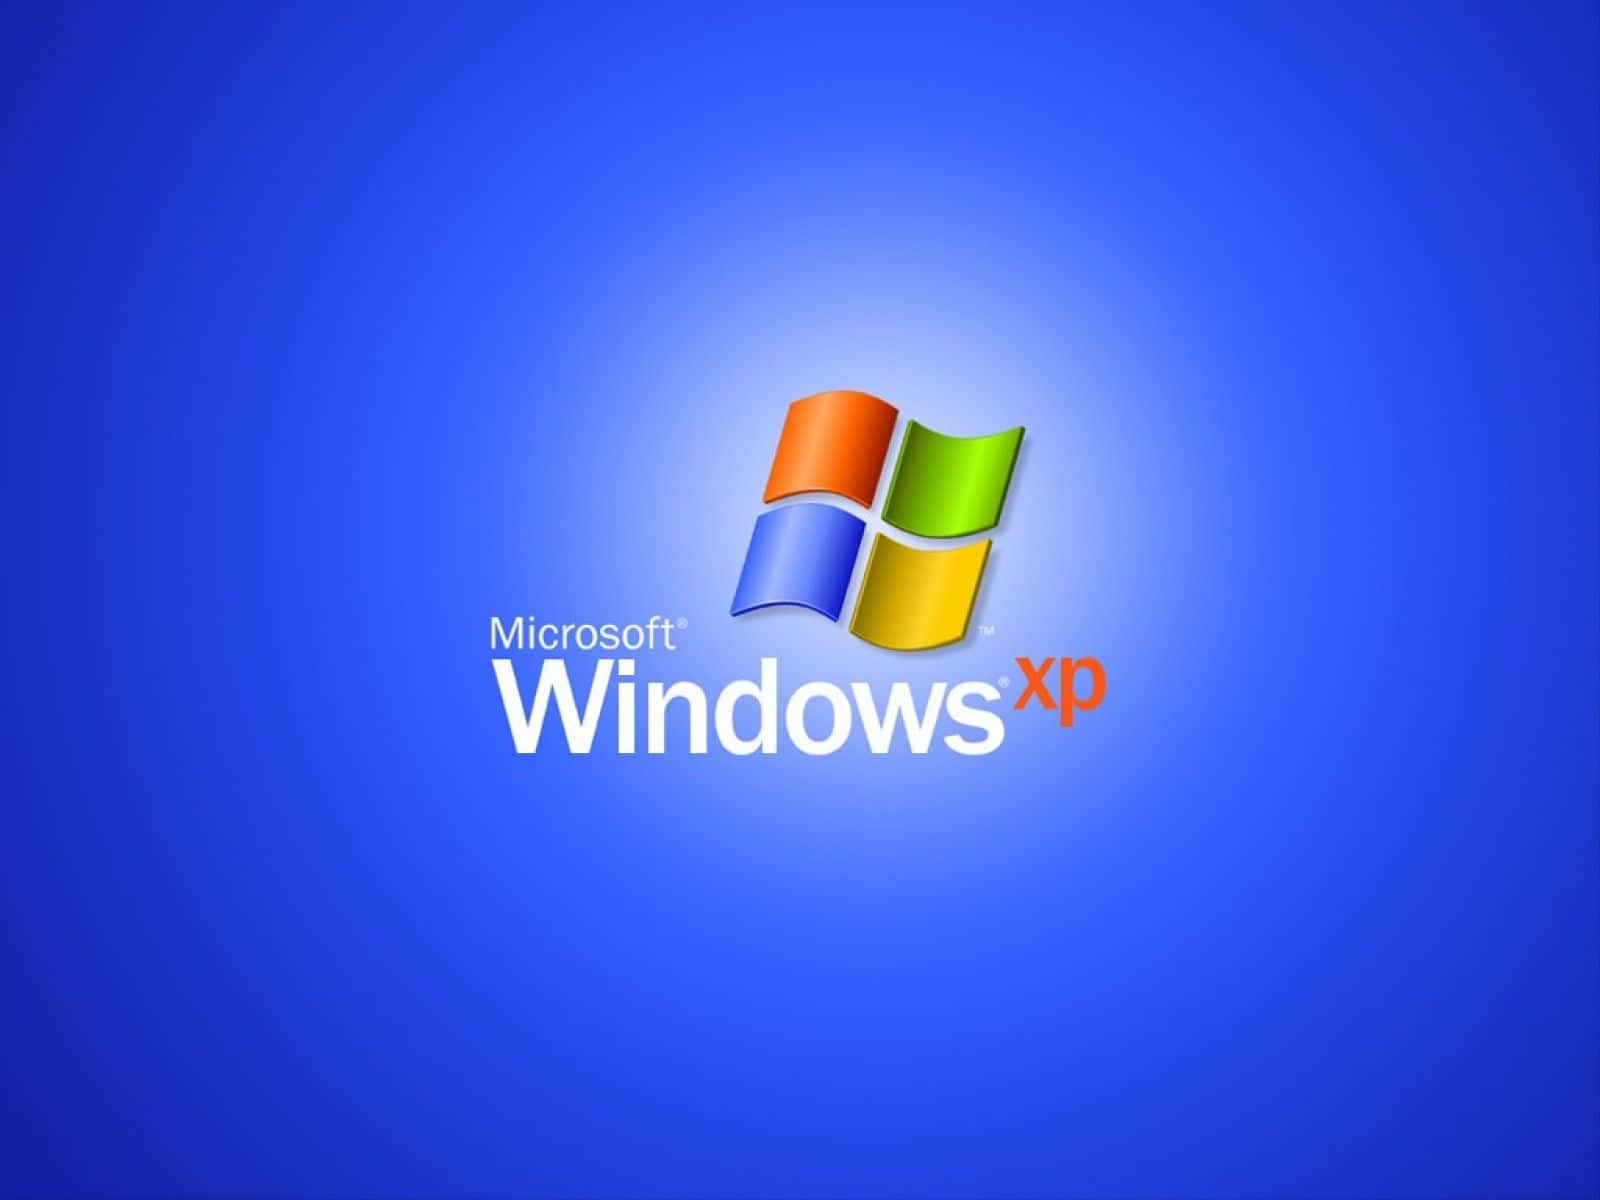 Windowsxp-logo. Wallpaper